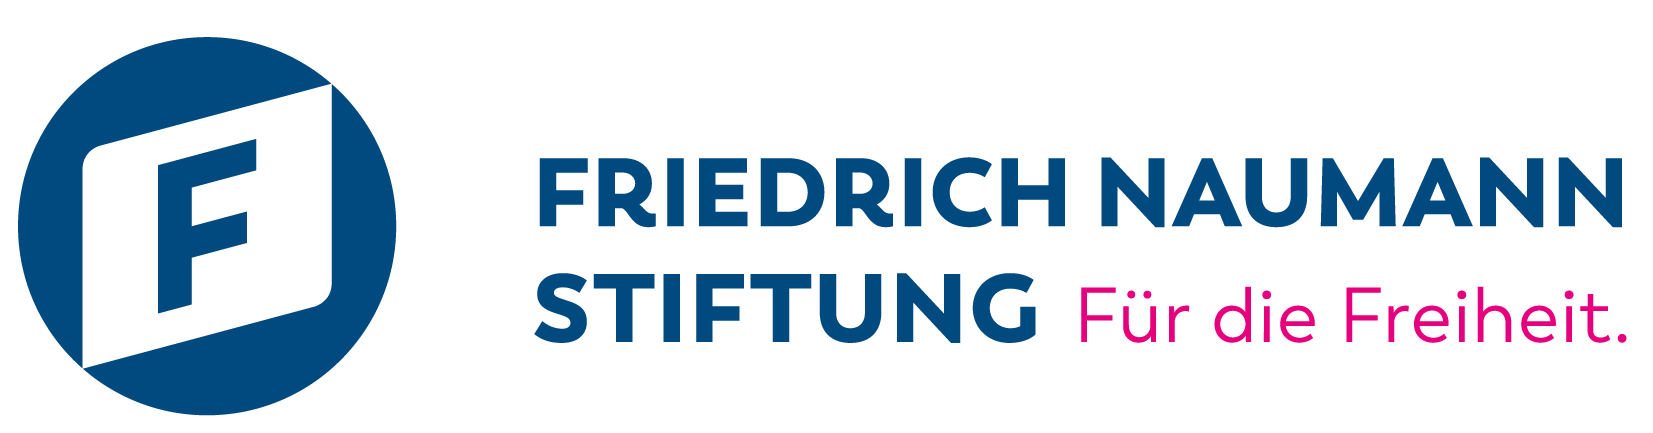 friedrich-naumann_logo